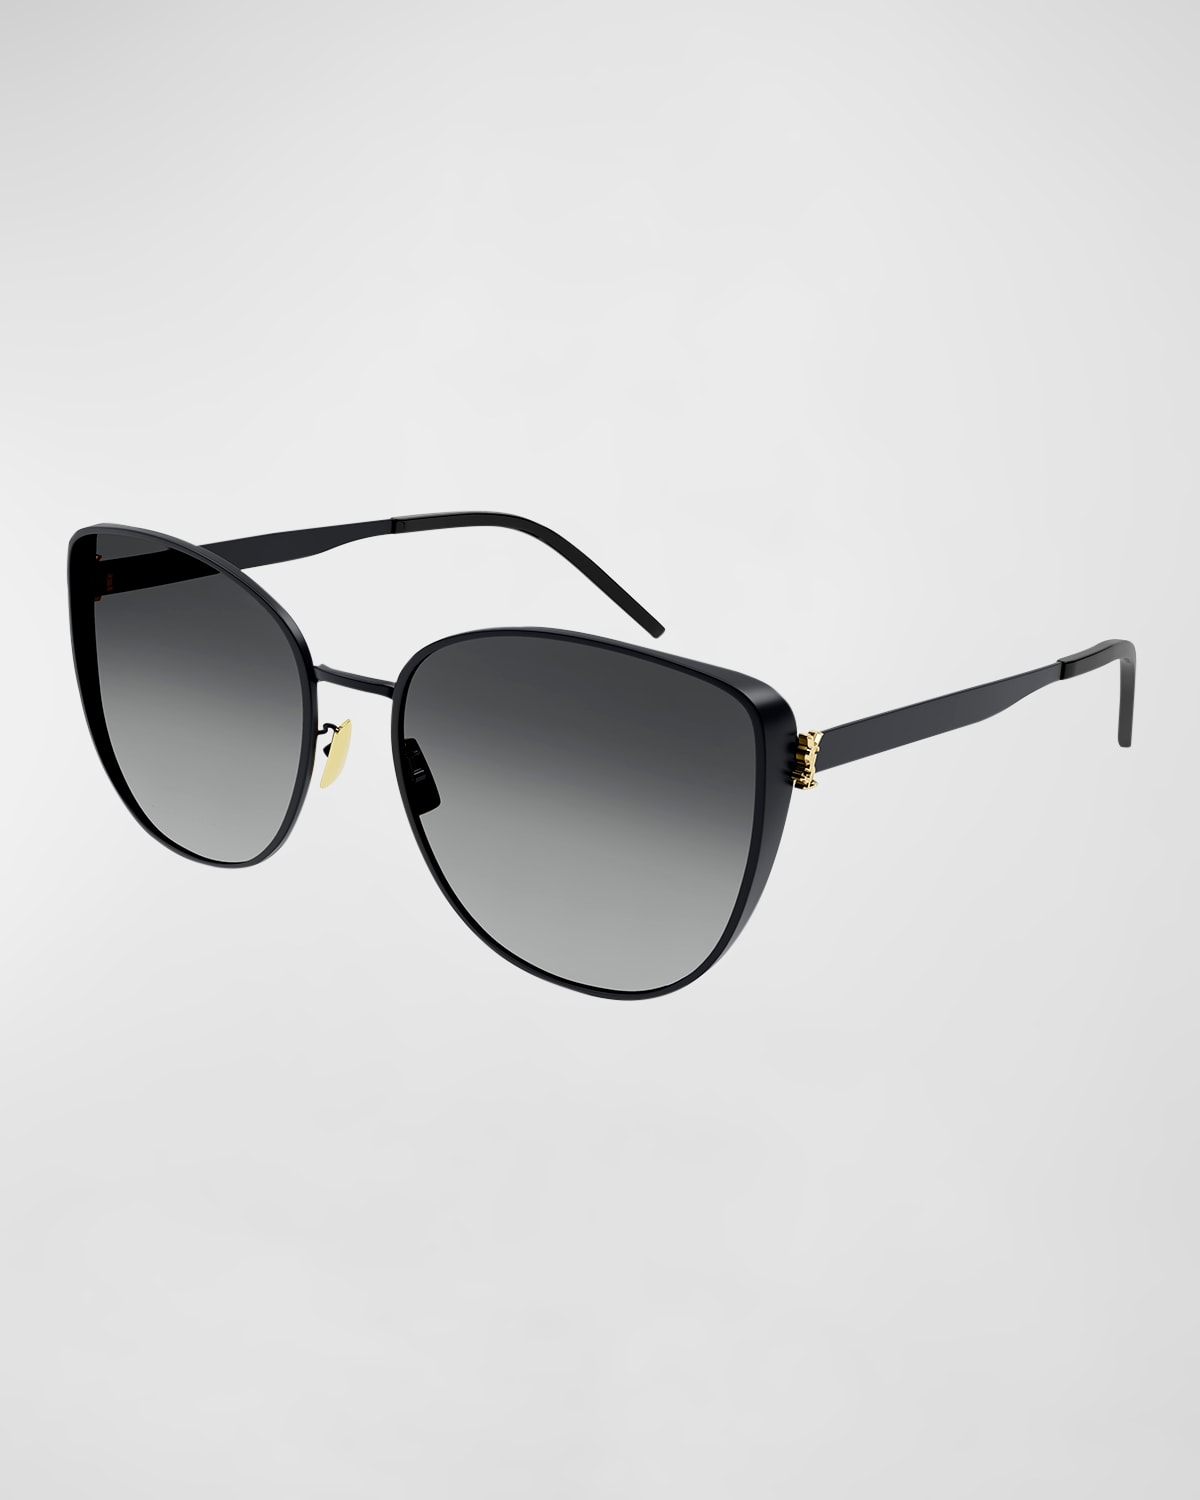 YSL Round Metal Sunglasses